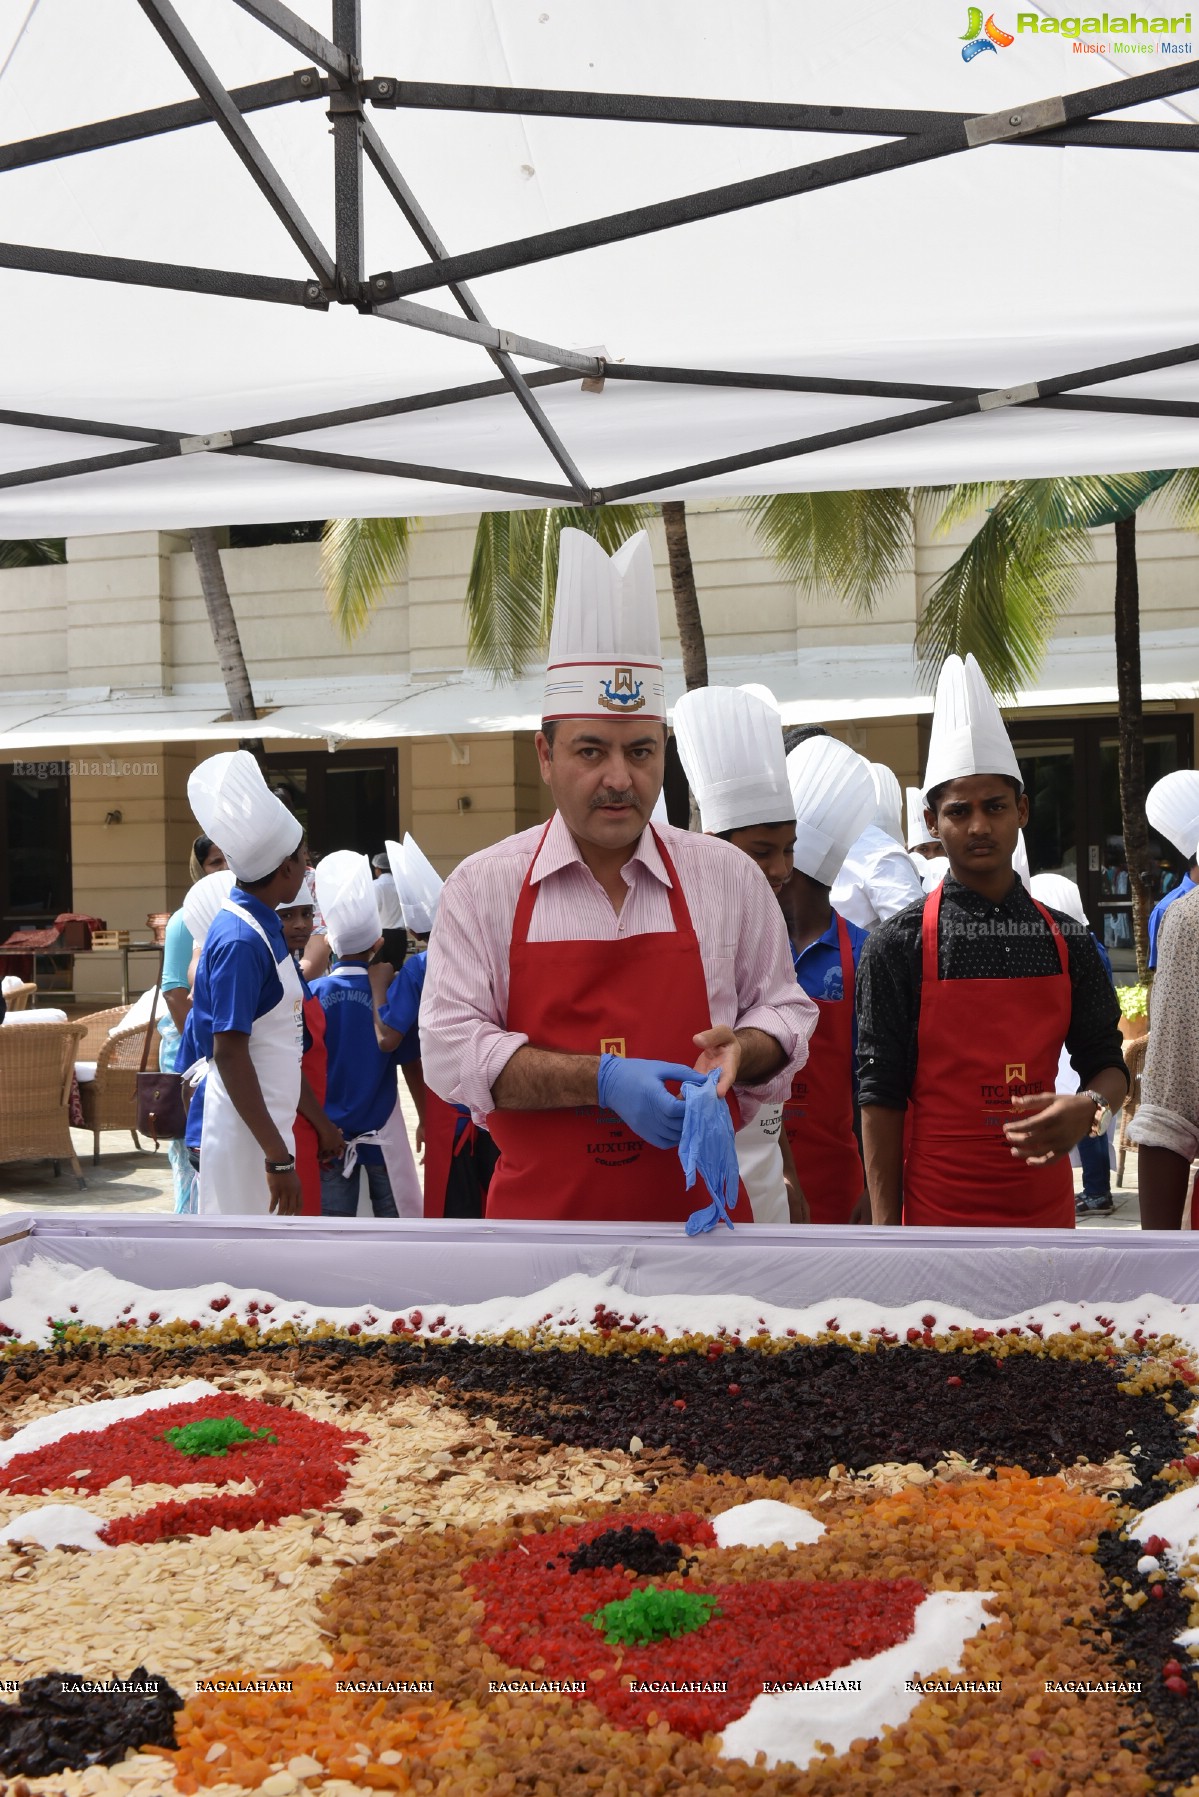 ITC Kakatiya Hotel Hosted Its Annual Cake Mixing Ceremony 2018